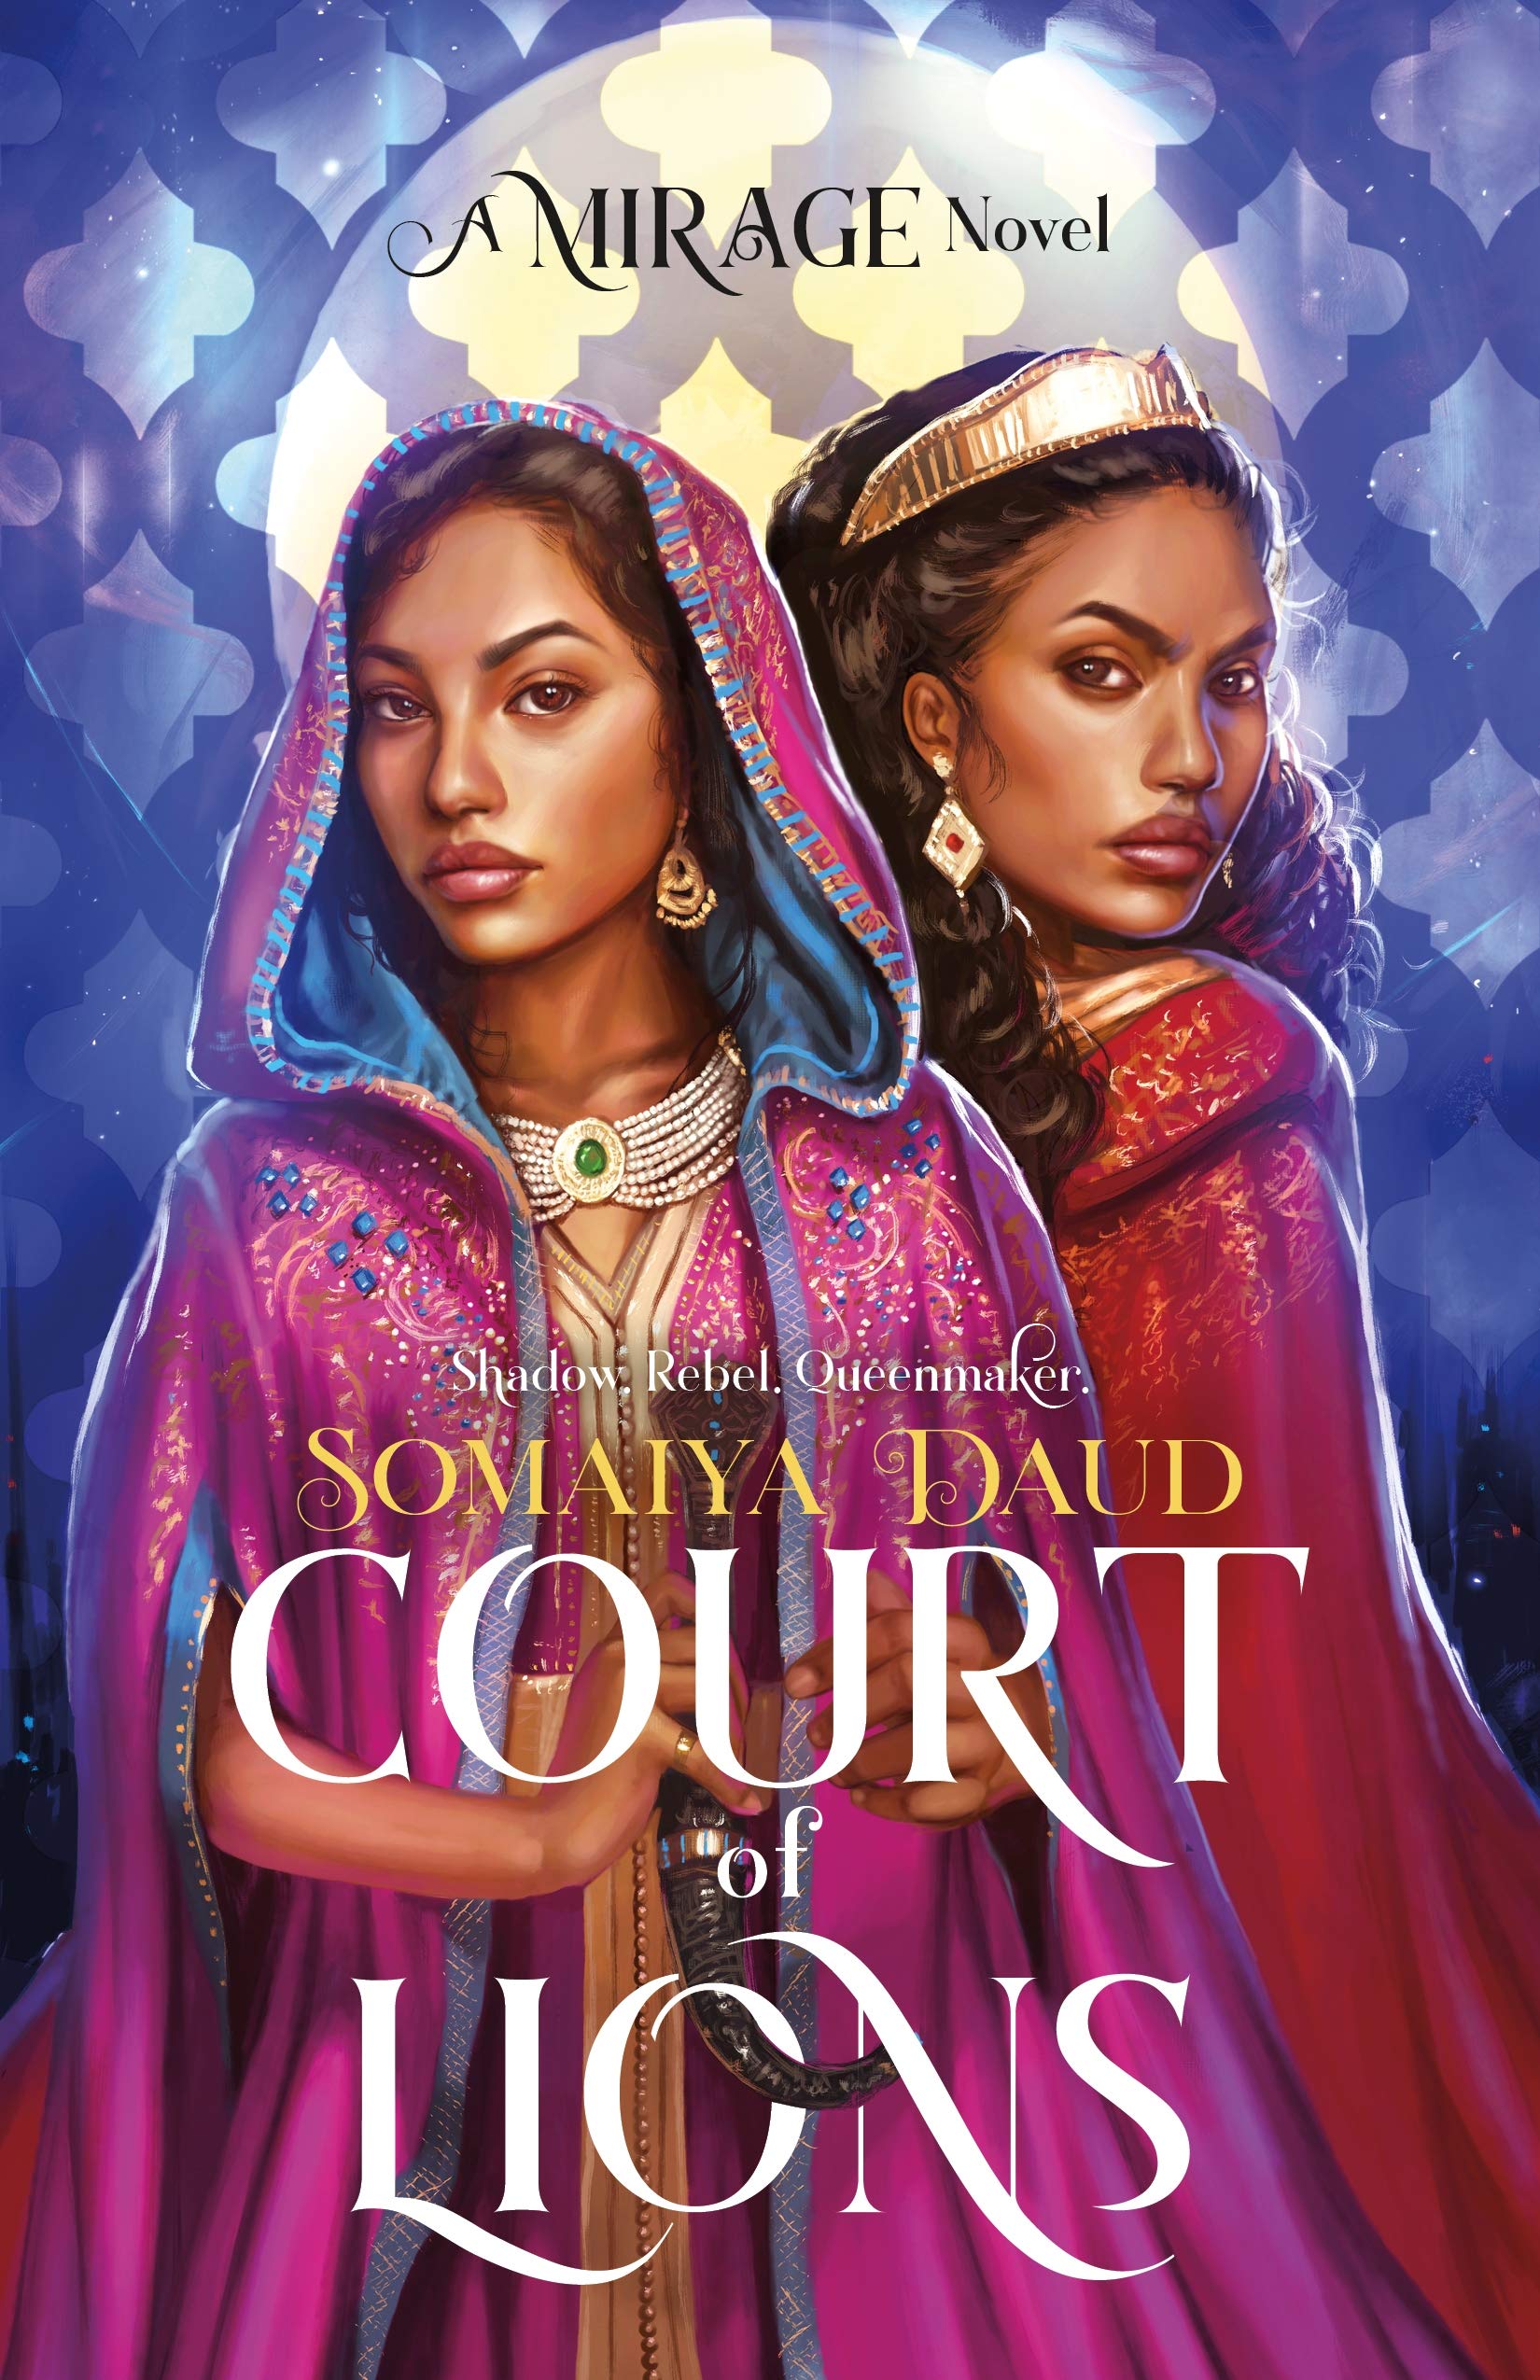 Court of Lions:  A Mirage novel